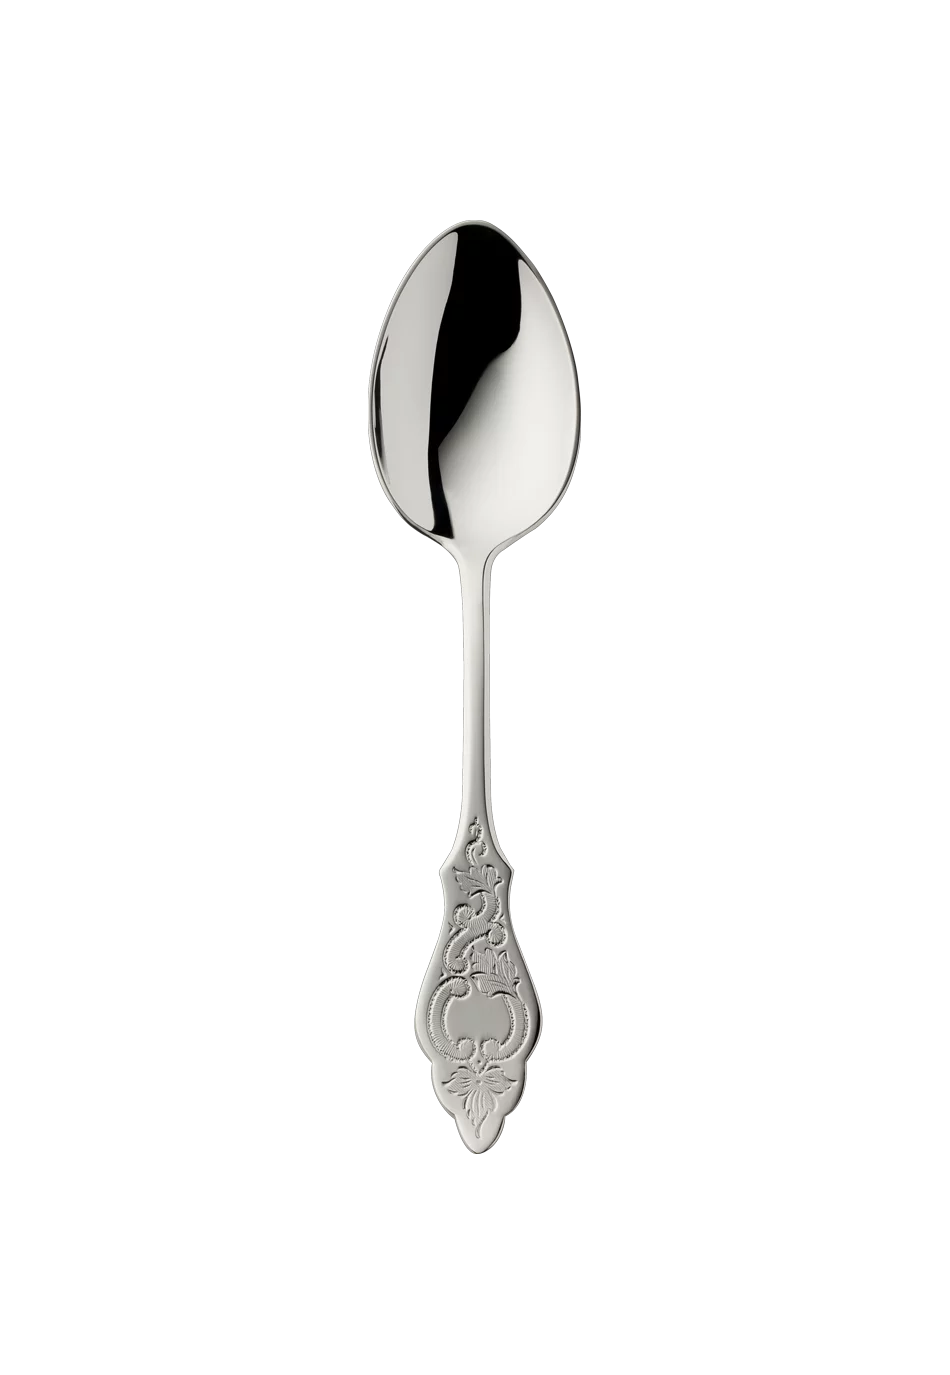 Ostfriesen Menu Spoon (18/8 stainless steel)